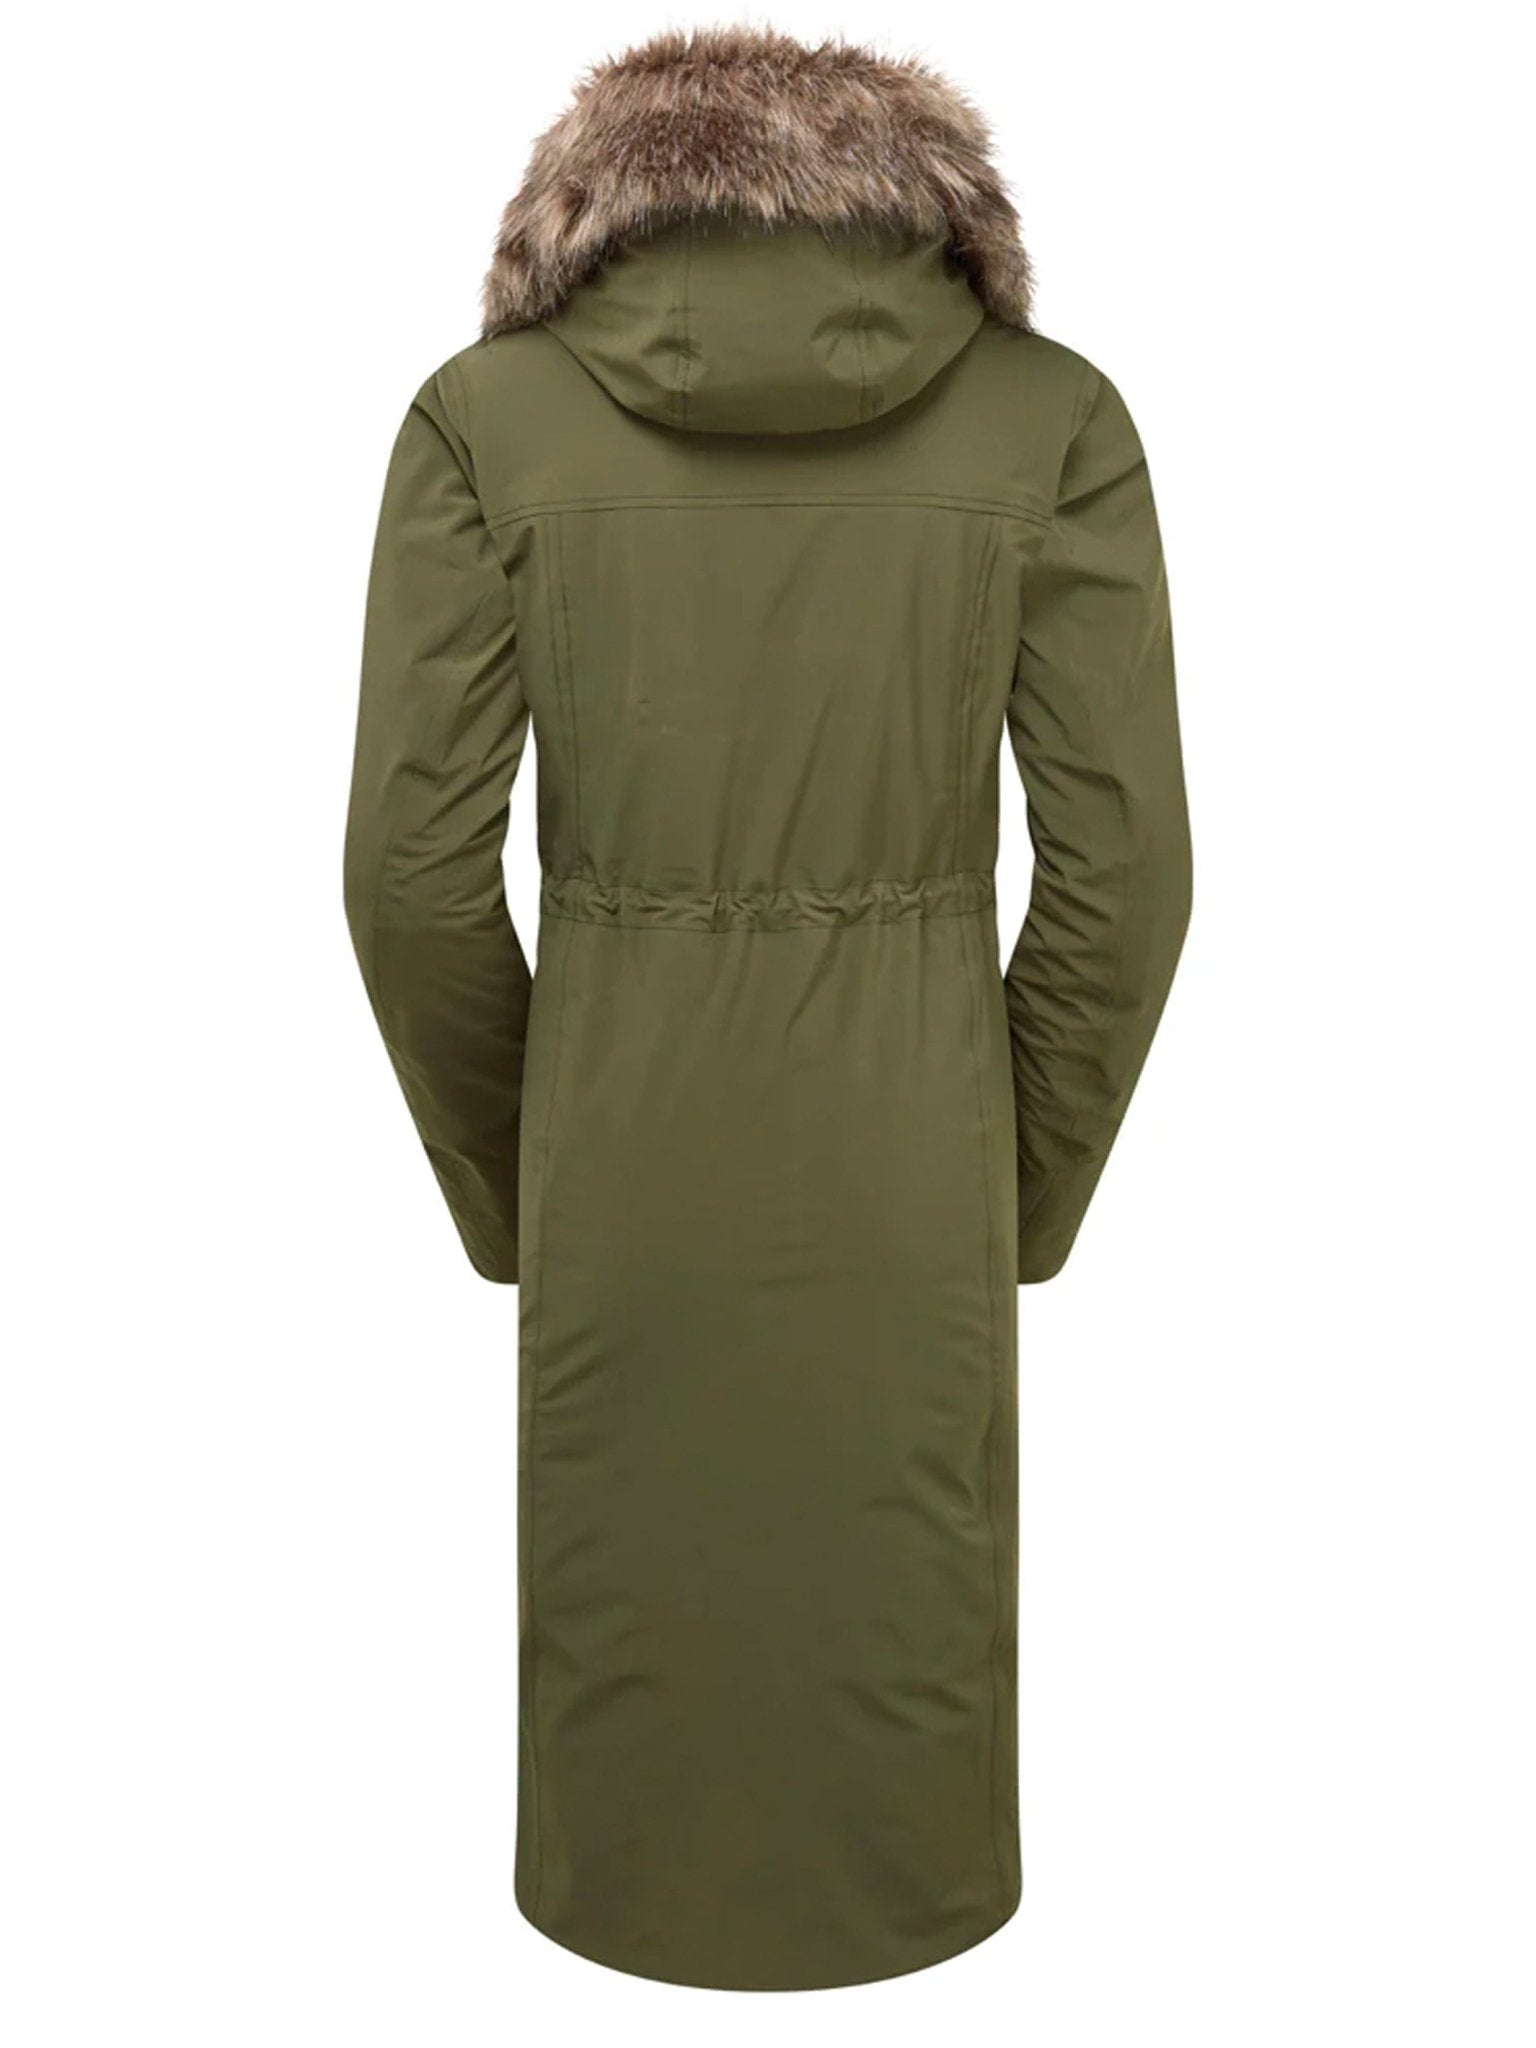 4elementsclothingKeelaKeela Outdoors - Keela Crofter Parka Long ladies coat 3/4 length waterproof windproof jacketOuterwear40350-100000-0-210